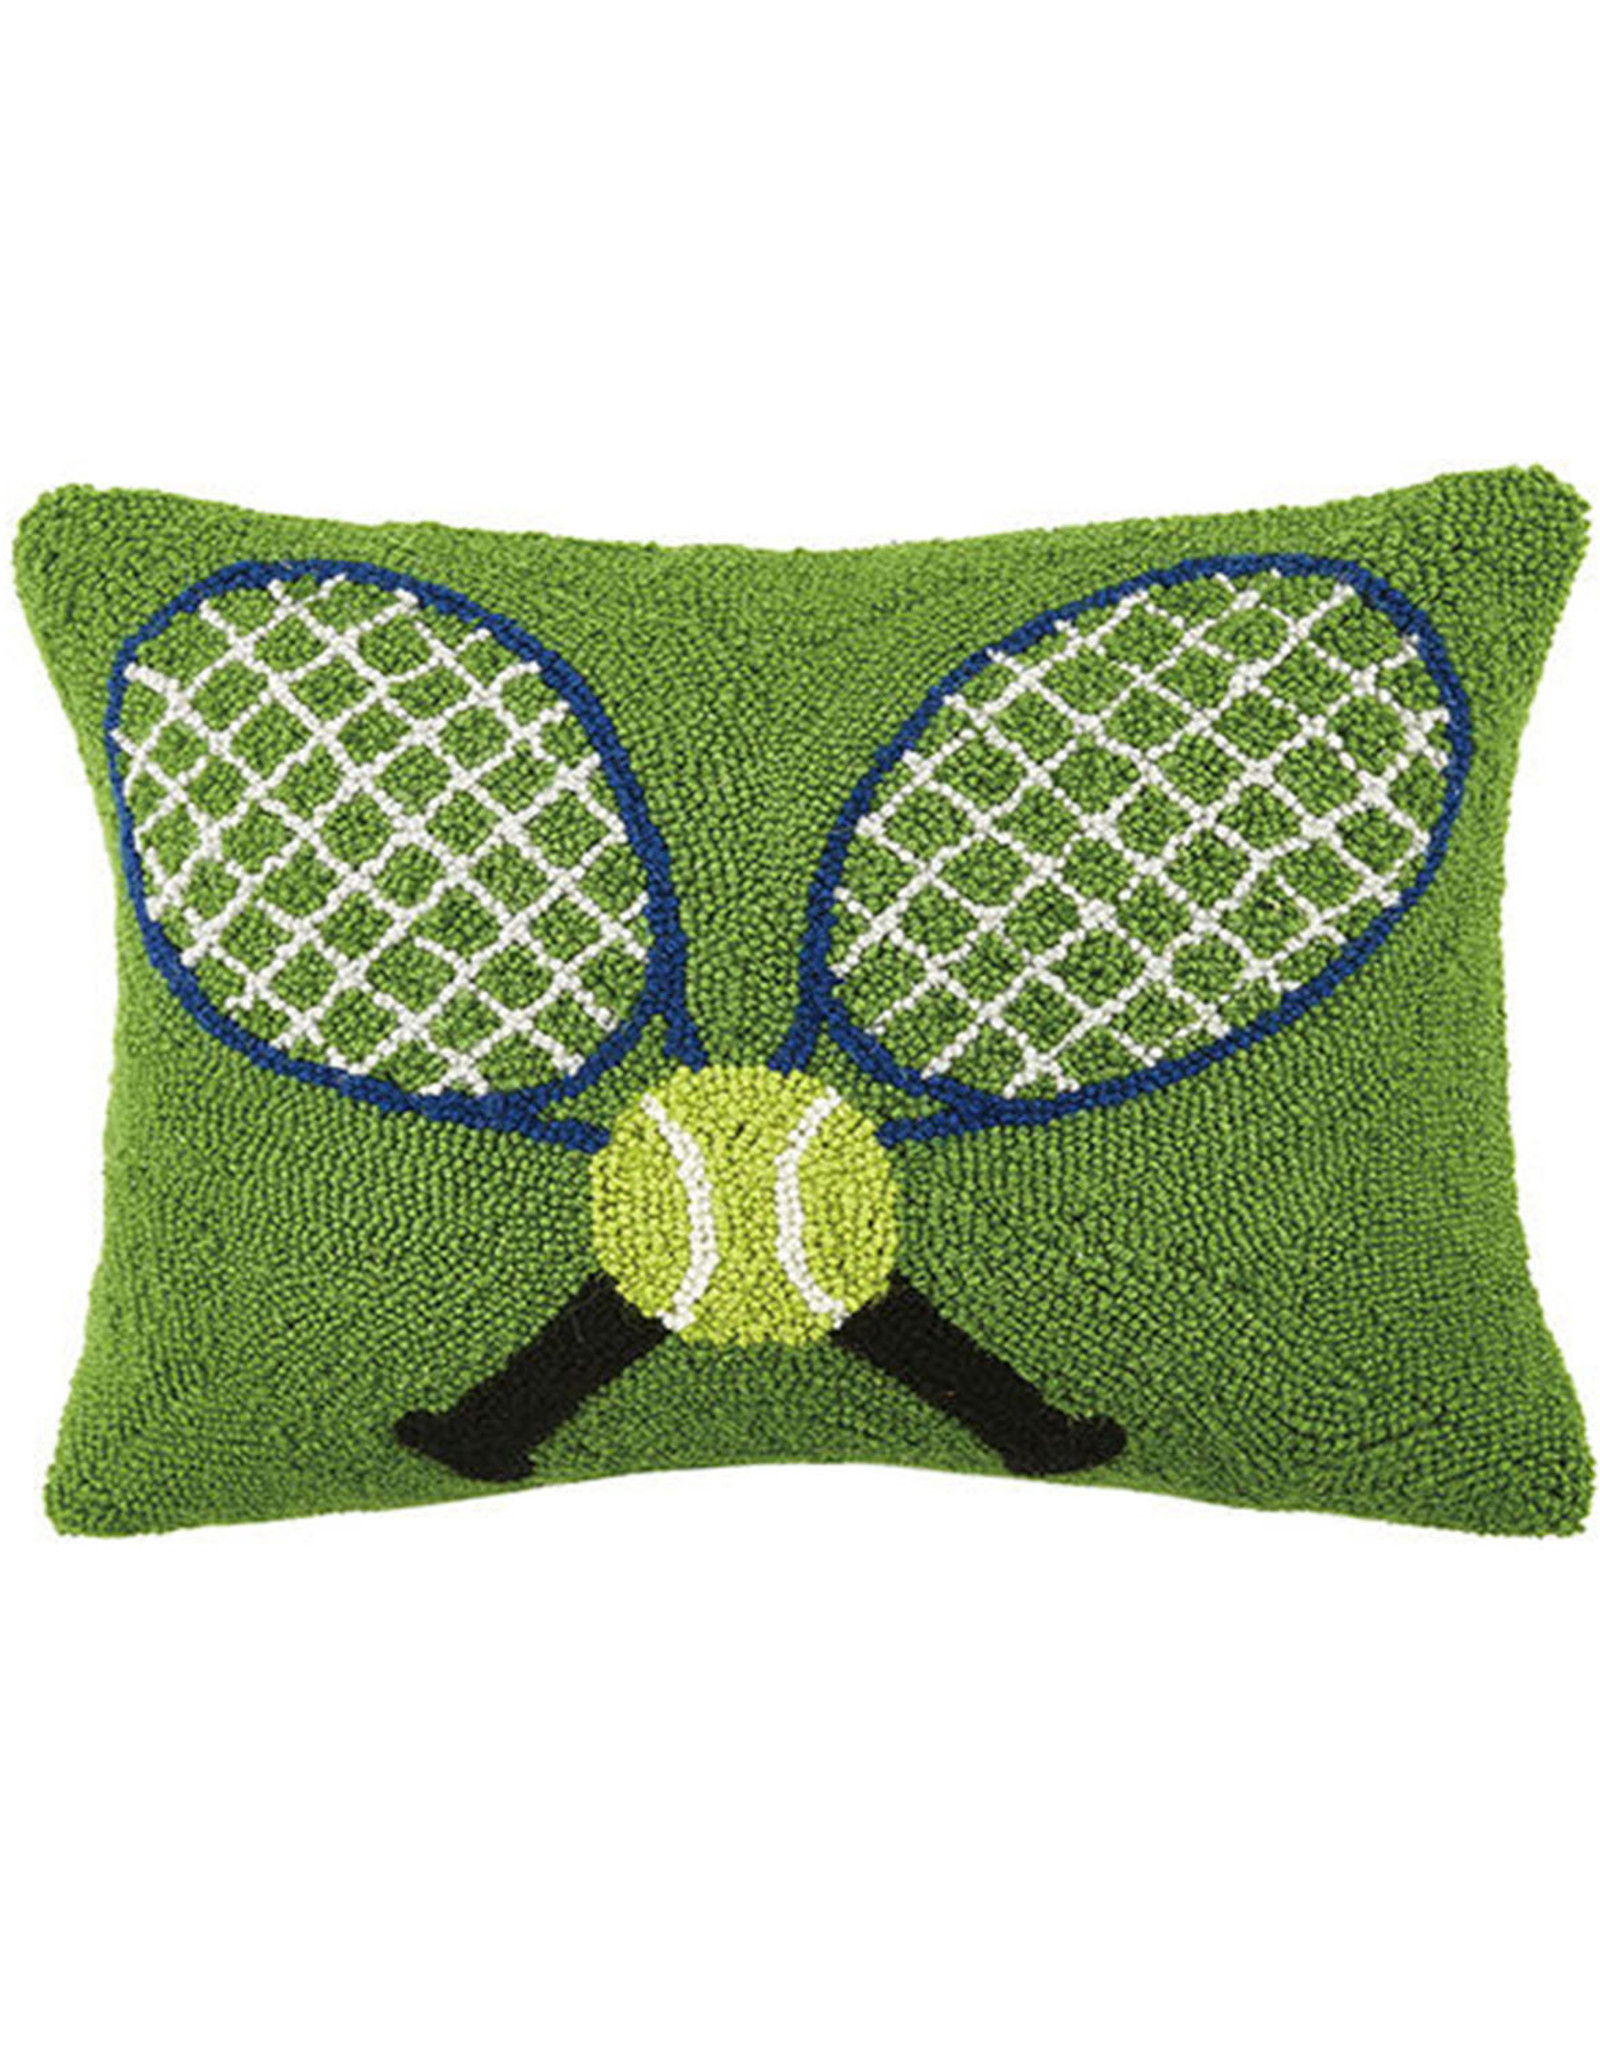 Crossed Tennis Rackets Hook Pillow - 18" Oblong